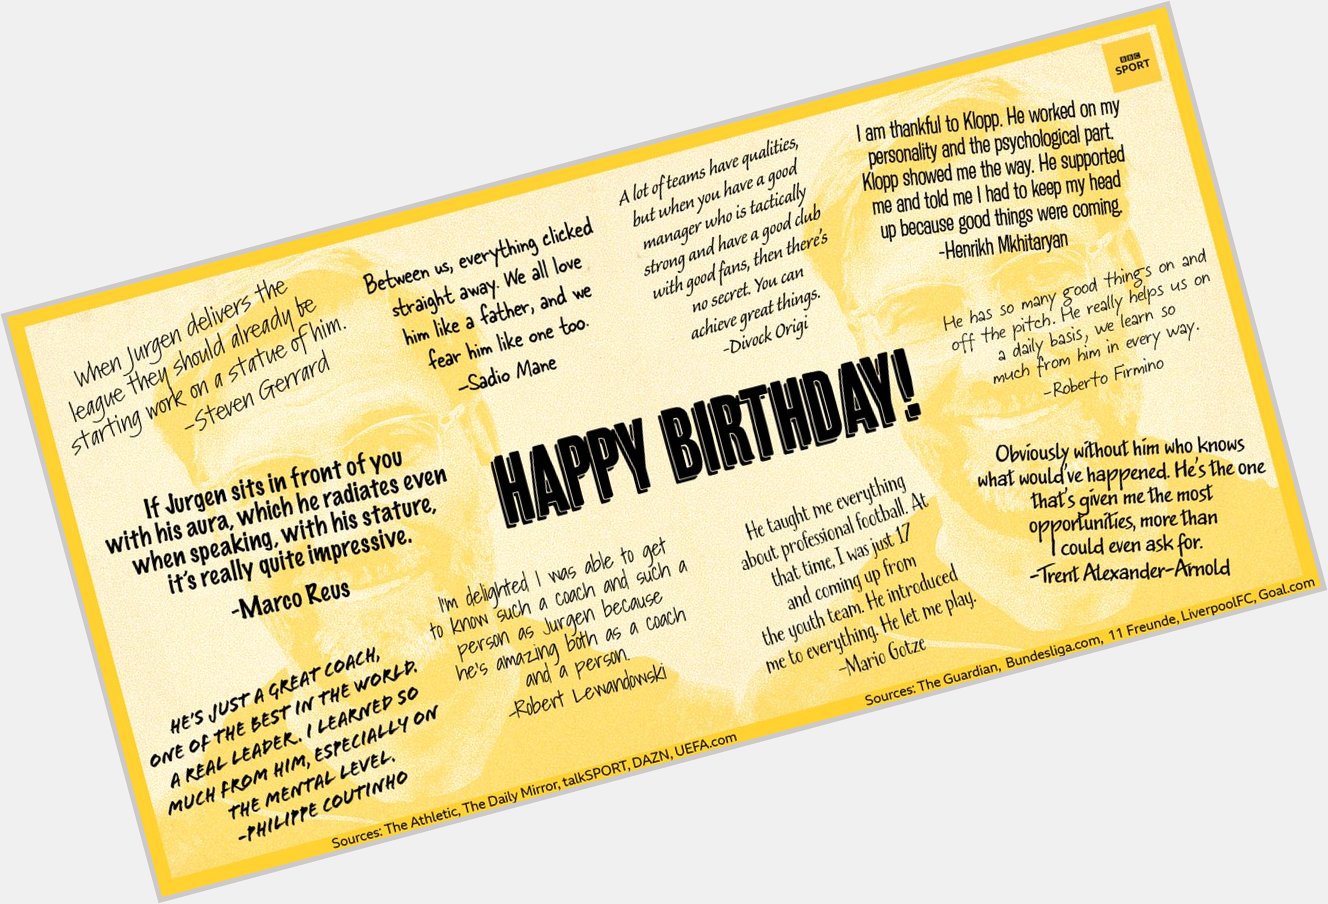 Happy birthday, Jurgen Klopp! We thought we\d pass a card around... 